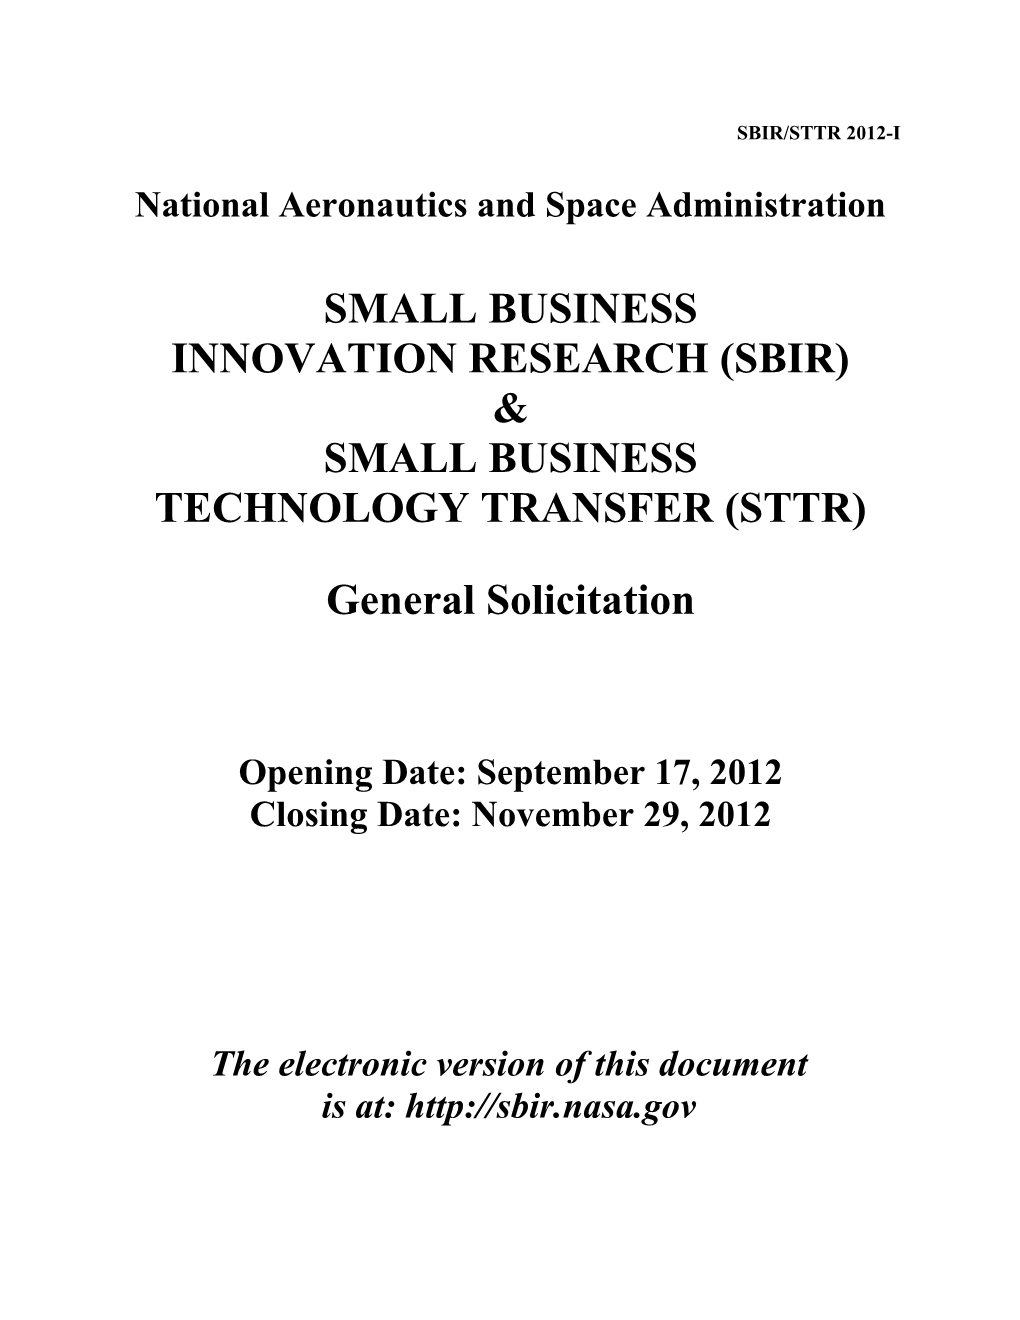 National Aeronautics and Space Administration s2